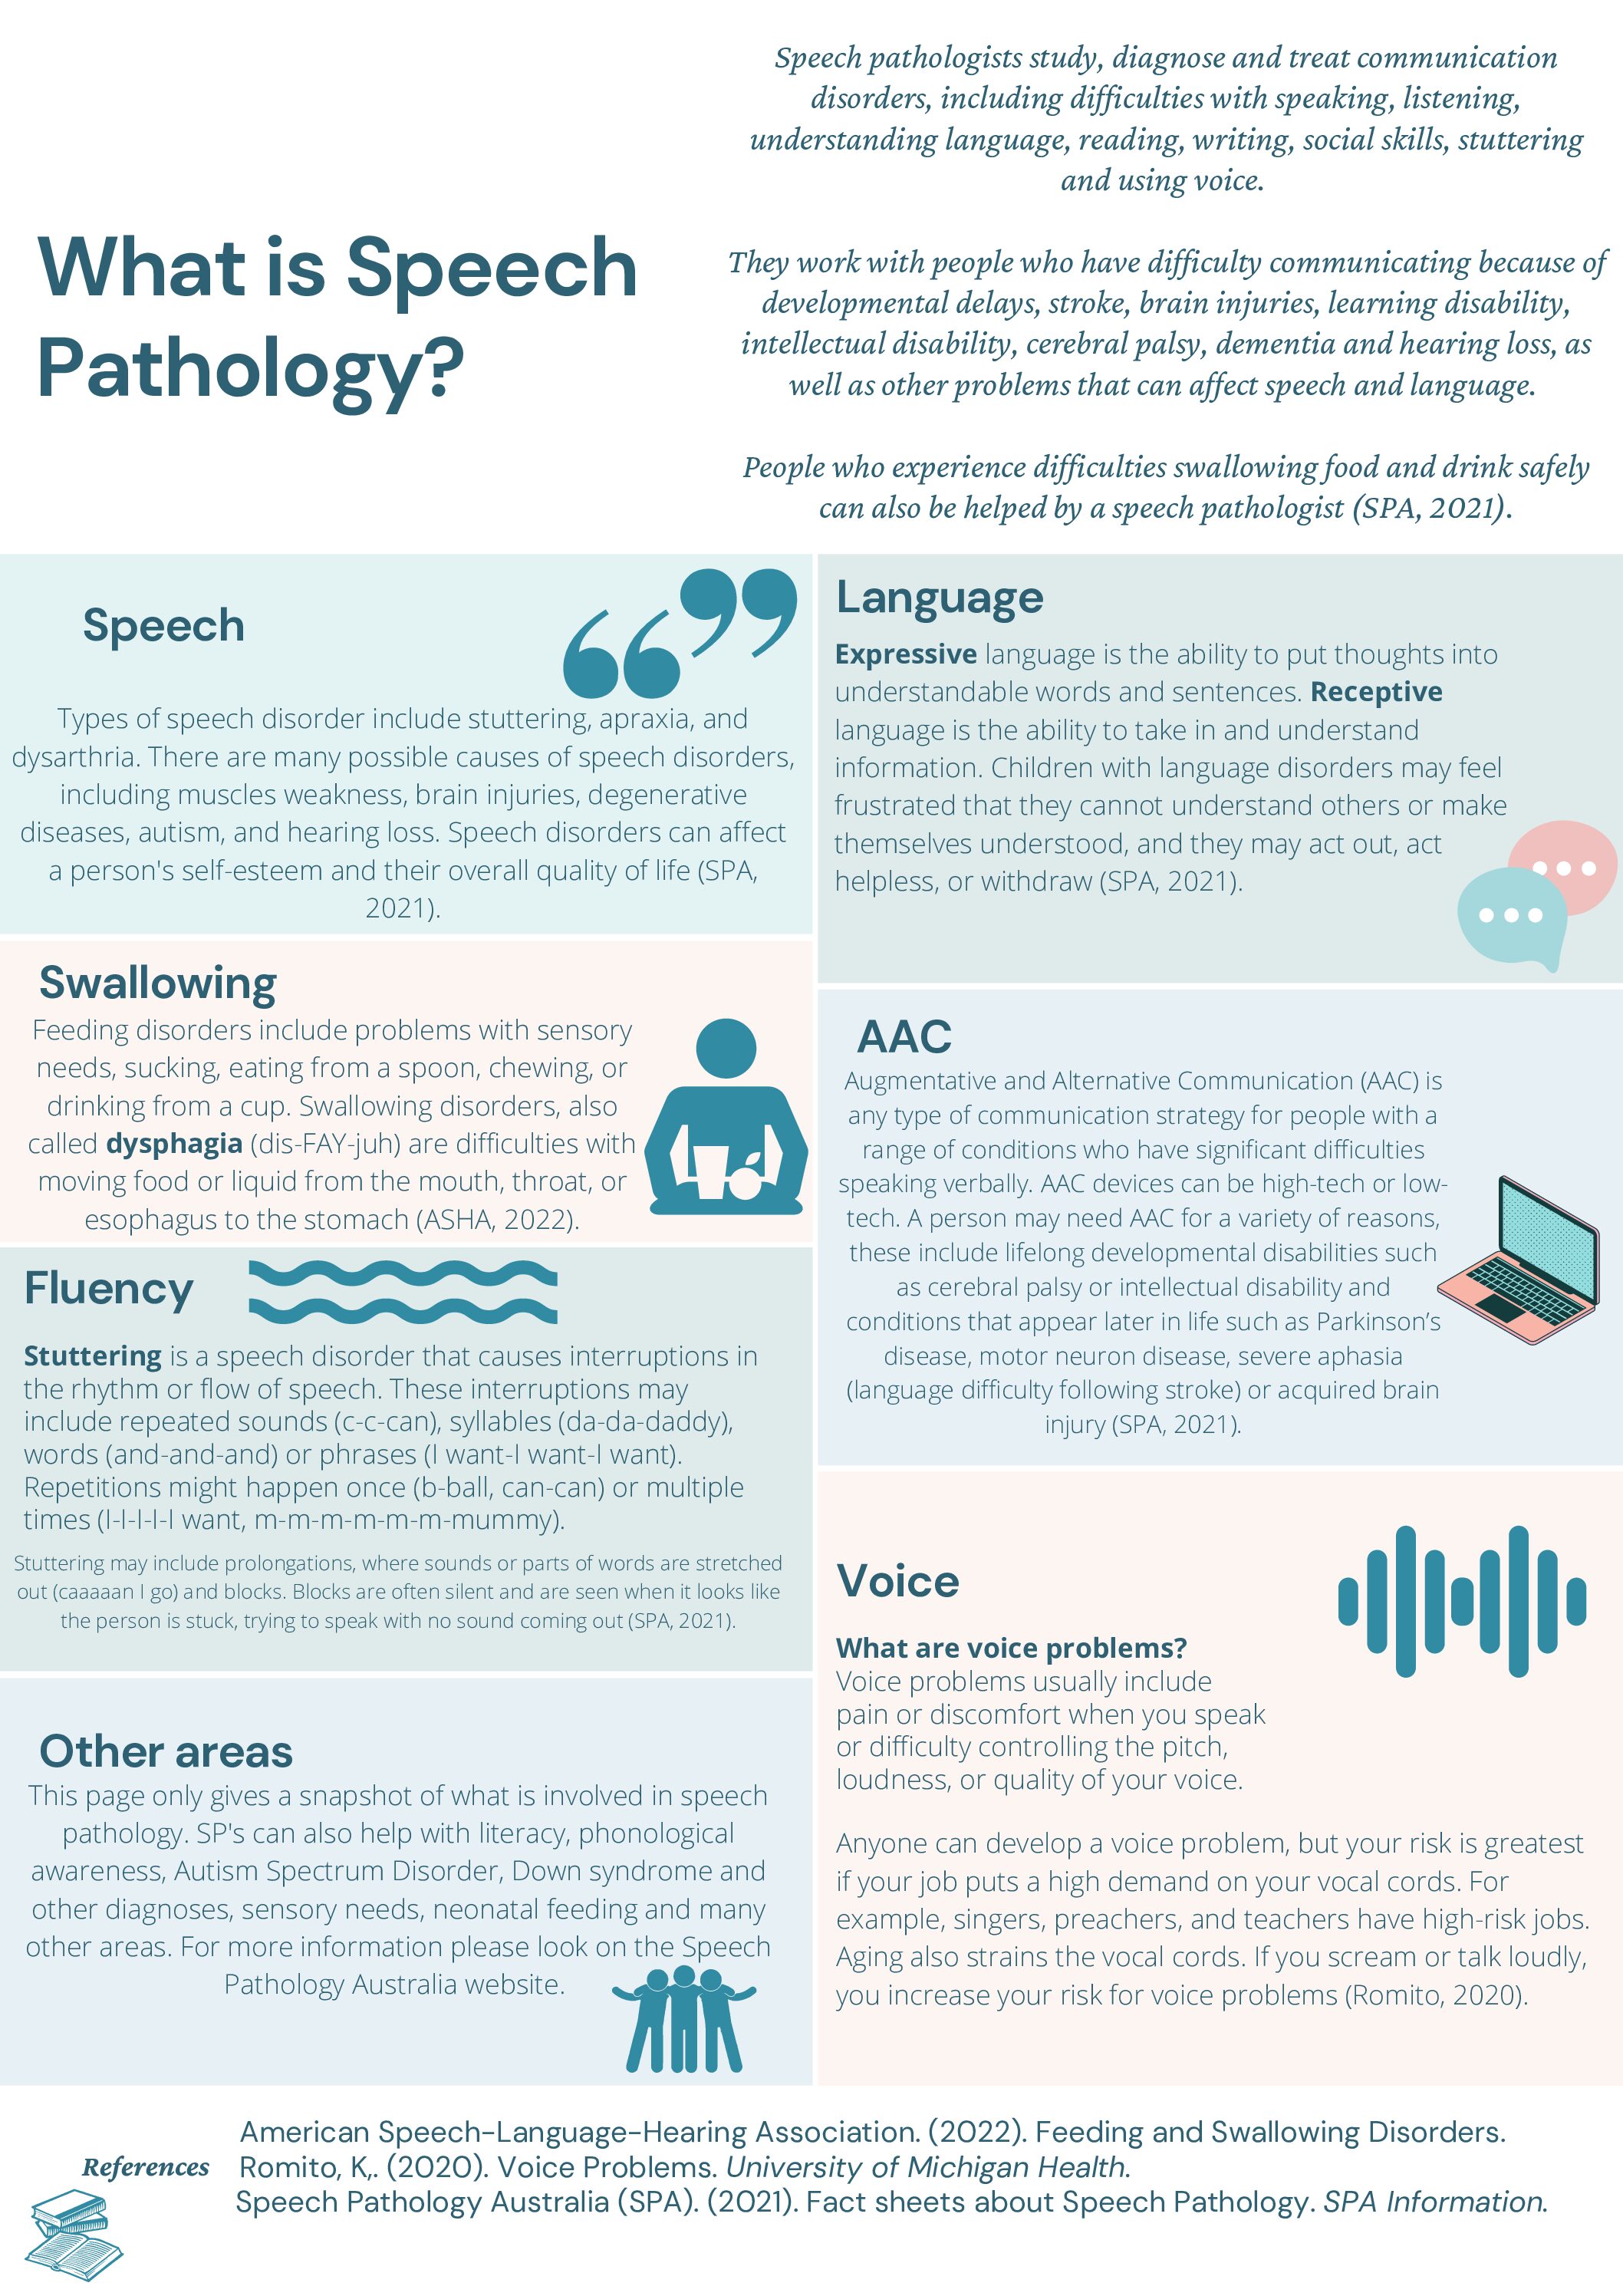 speech pathology definition